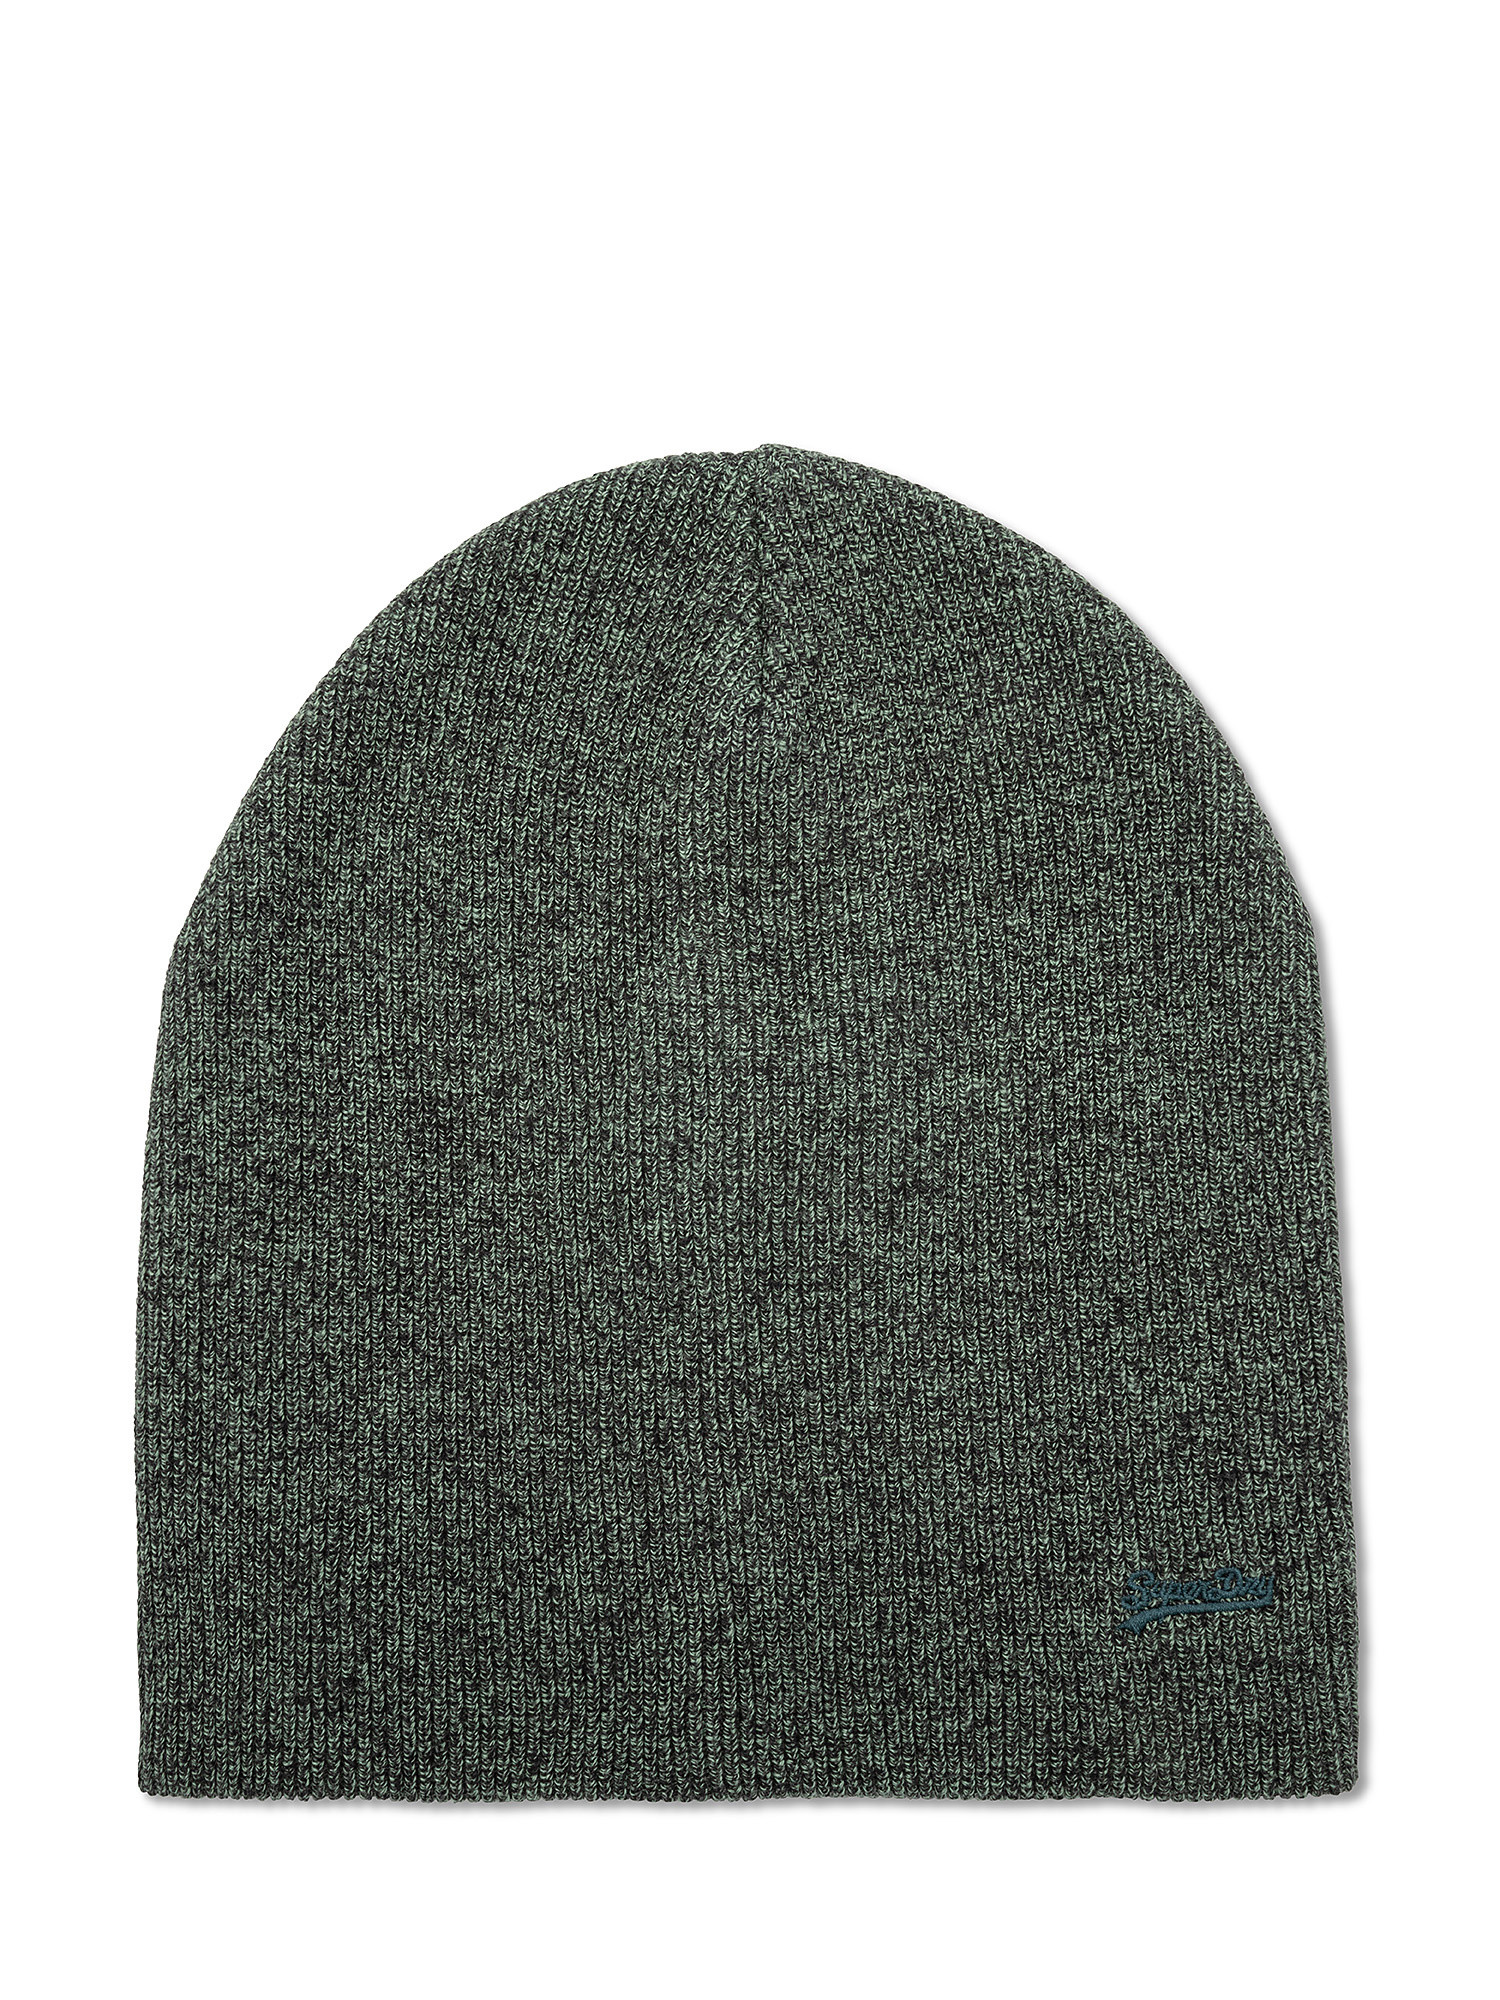 Superdry - Cotton cap, Olive Green, large image number 0